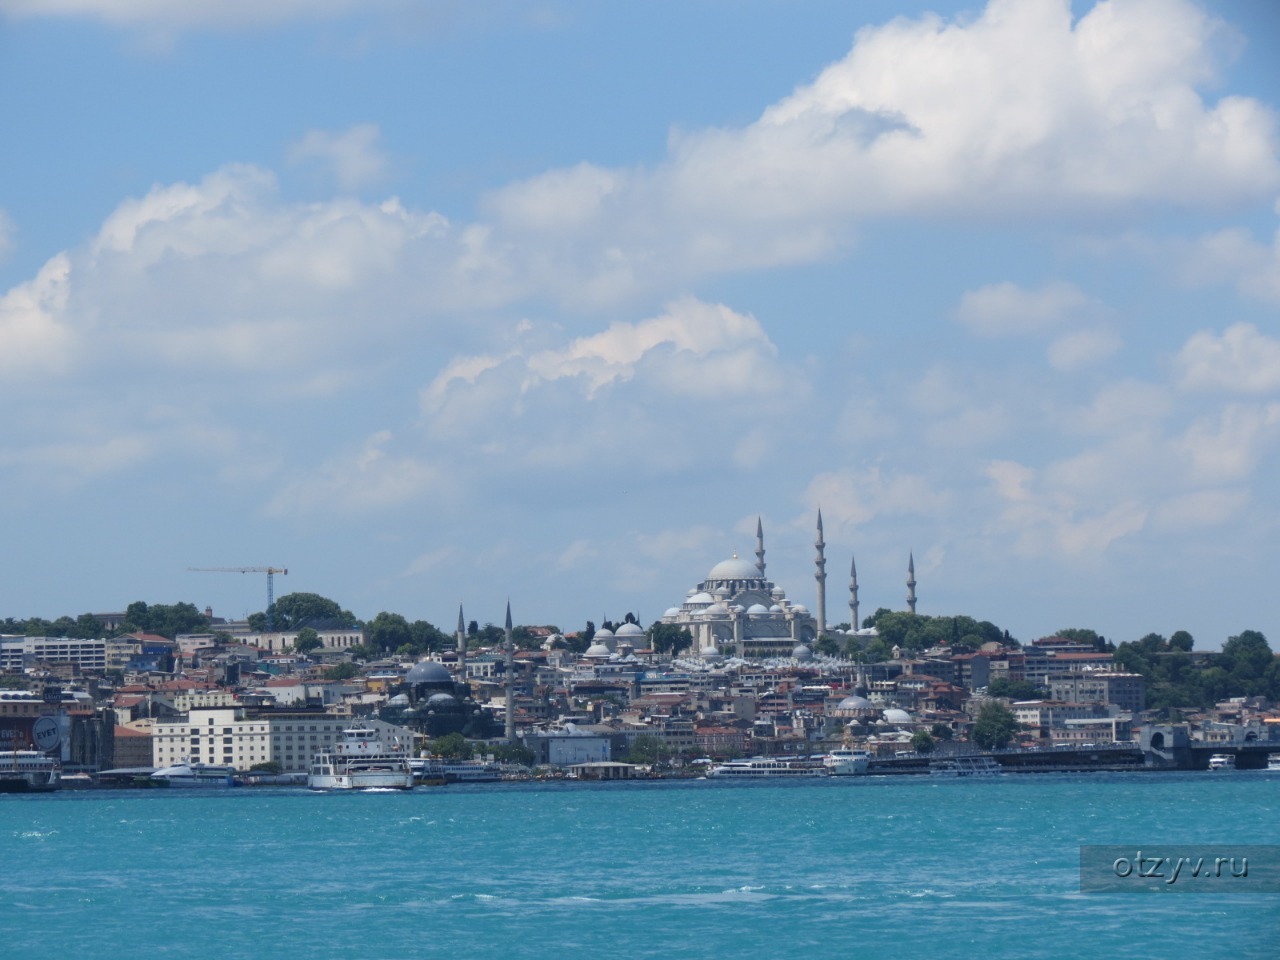 Стамбул 2017. Принцевы острова в Стамбуле. Мраморное море Стамбул. Мраморное море в Стамбуле фото. Принцевы острова в Стамбуле фото достопримечательности.